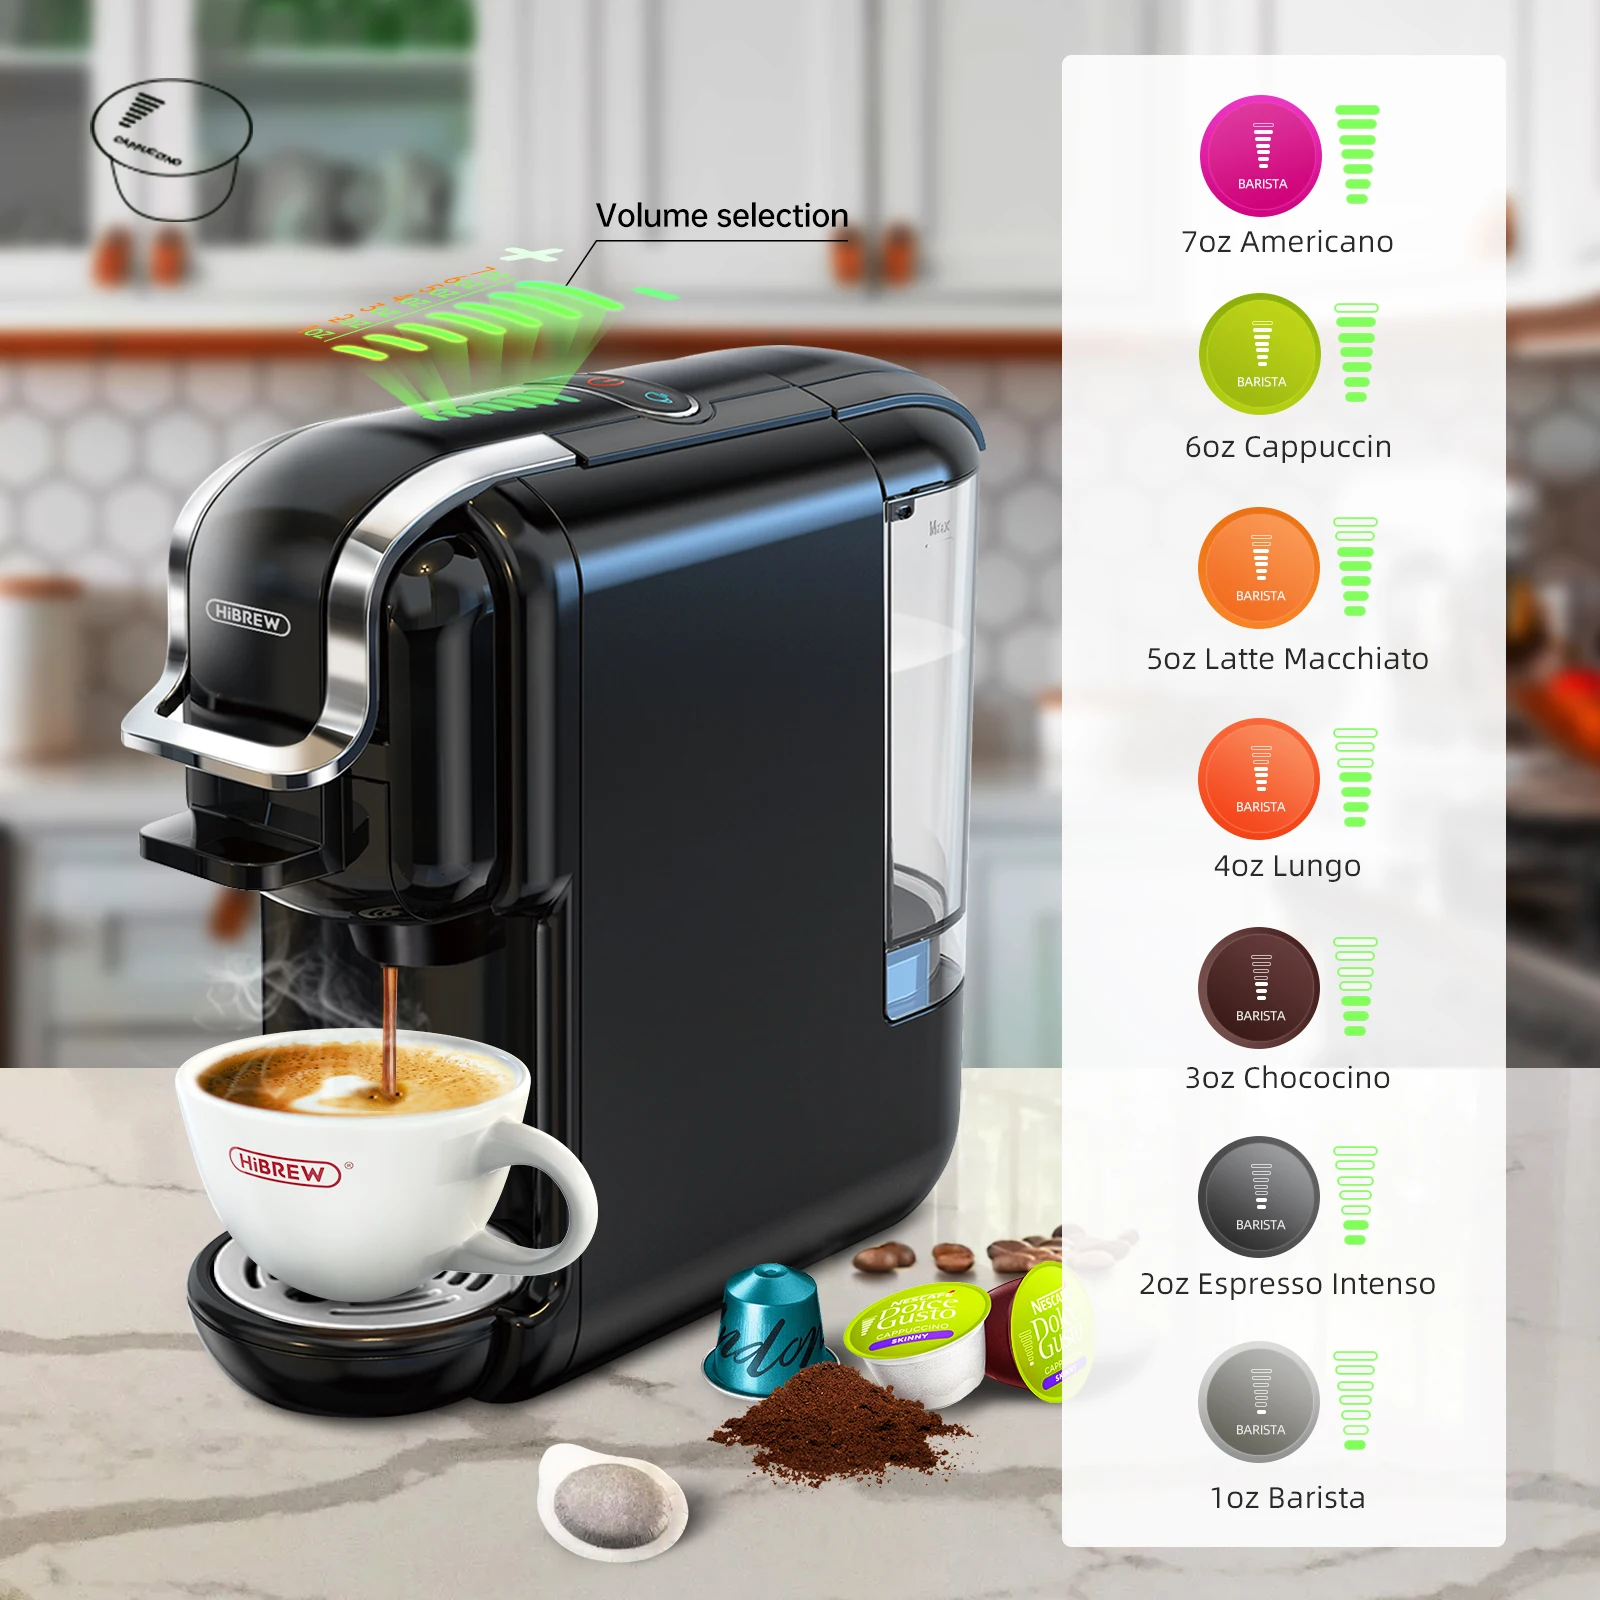 Single Serve Coffee Pod Machine 19 Bar 4in1 H2 Multi Capsule Expresso Milk  & Nes